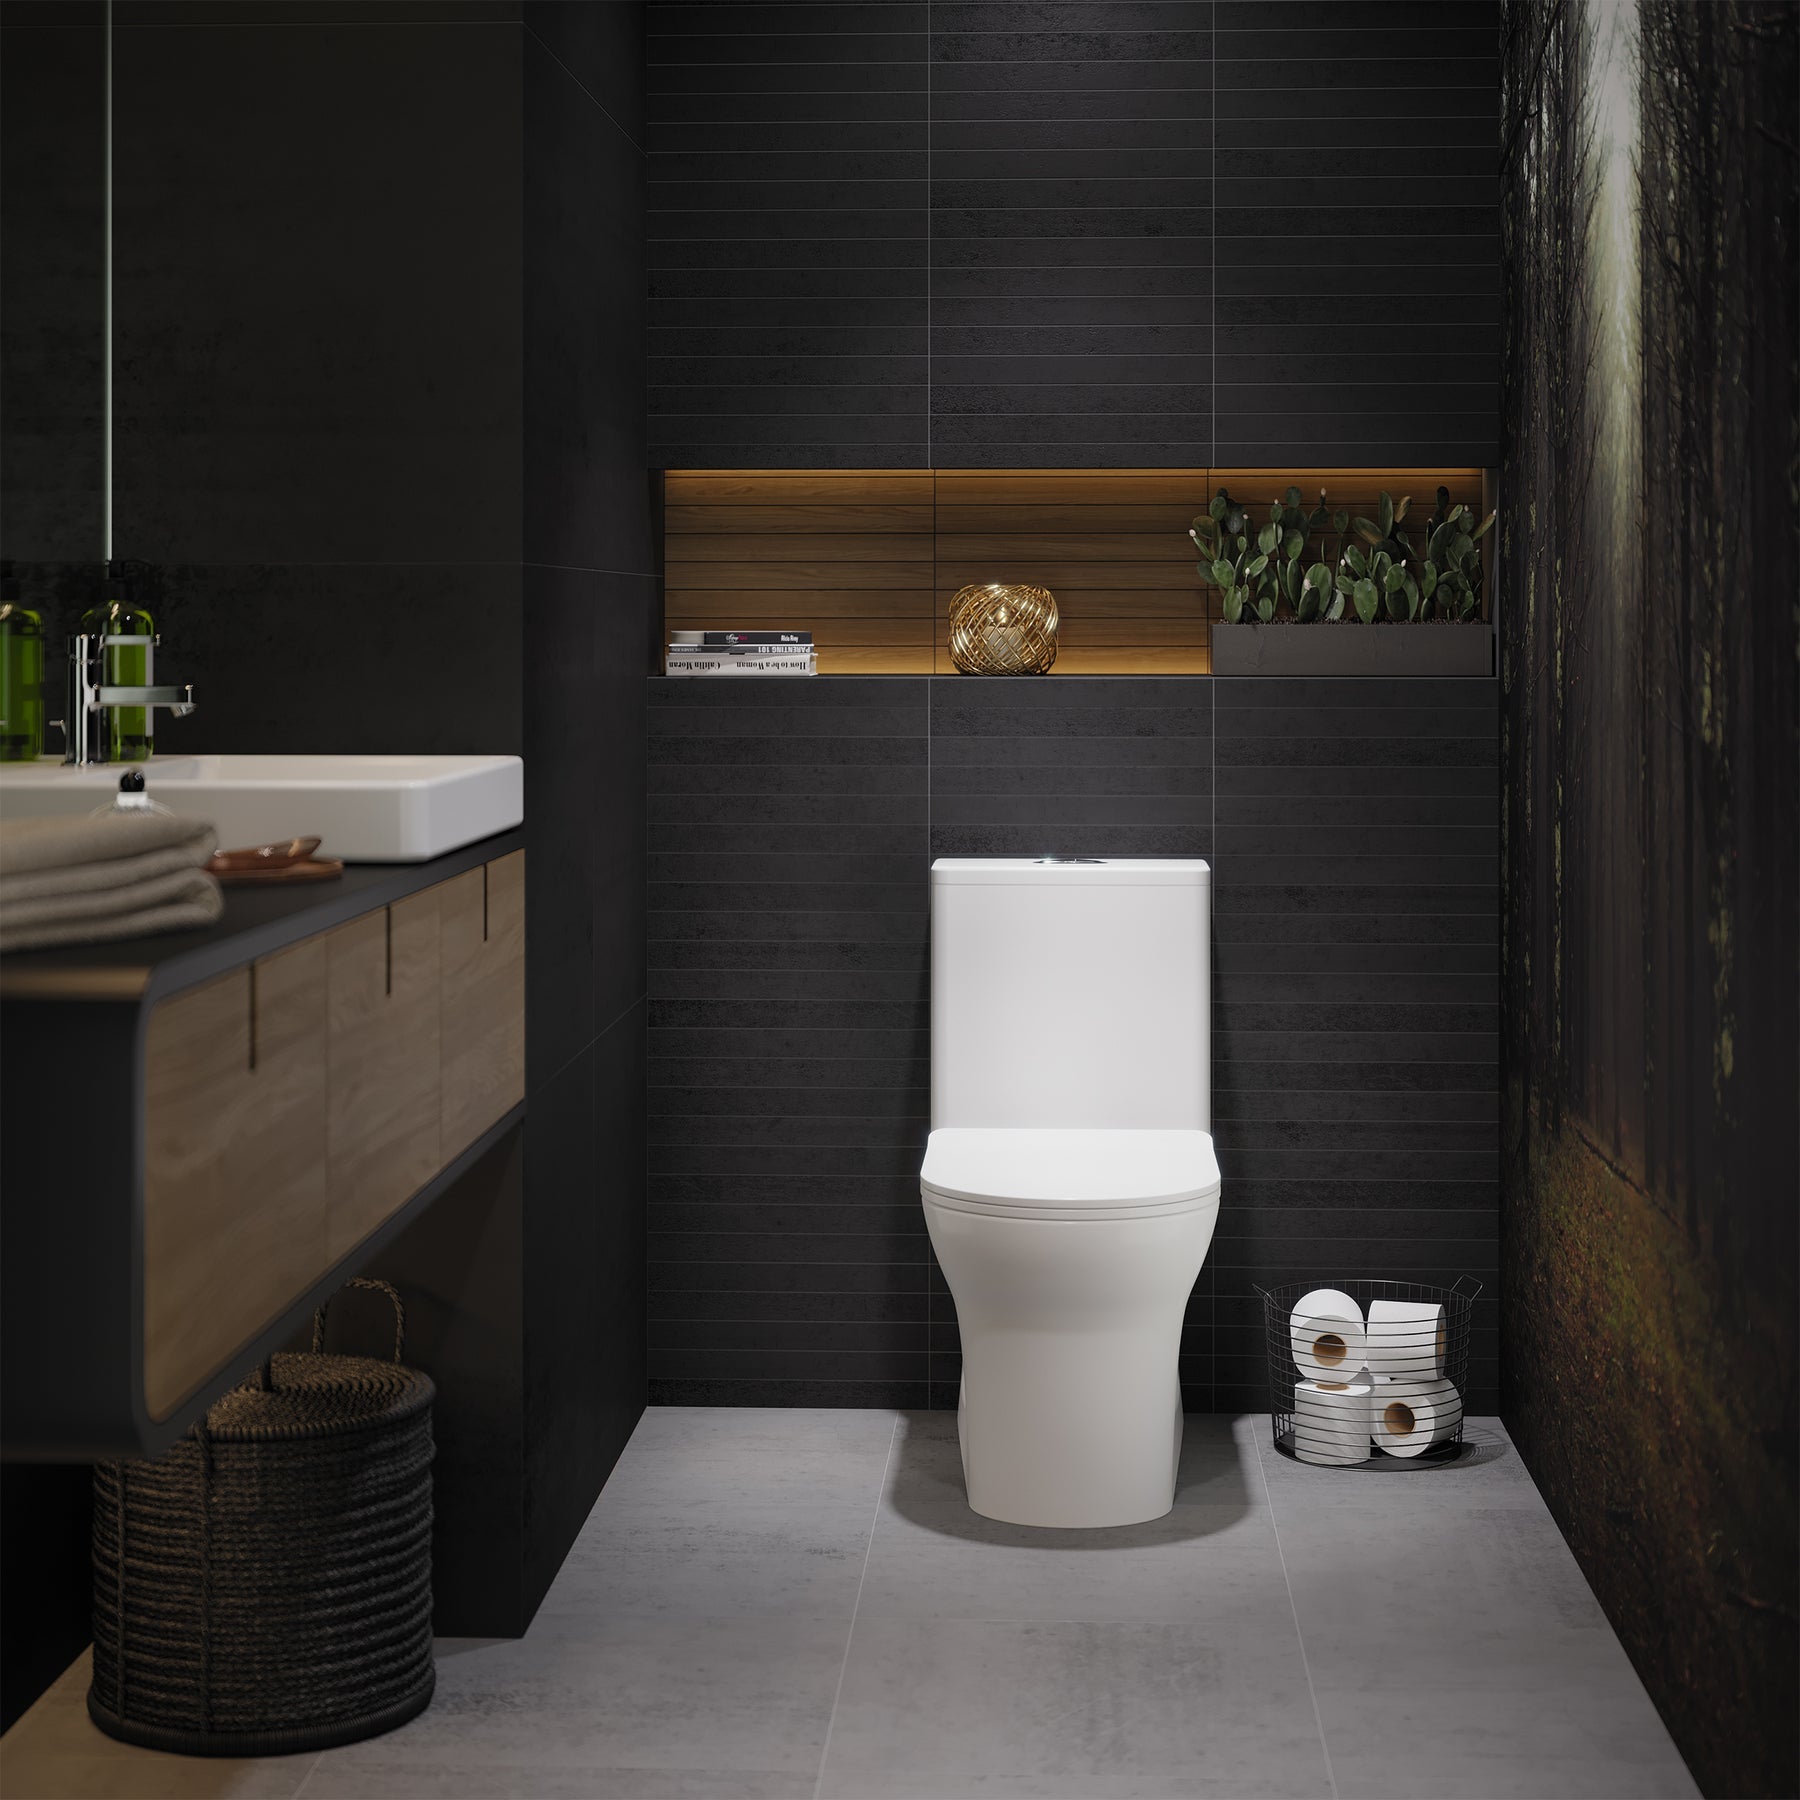 Swiss Madison Burdon One-Piece Elongated Toilet Vortex™ Dual-Flush 1.1/1.6 gpf - SM-1T111